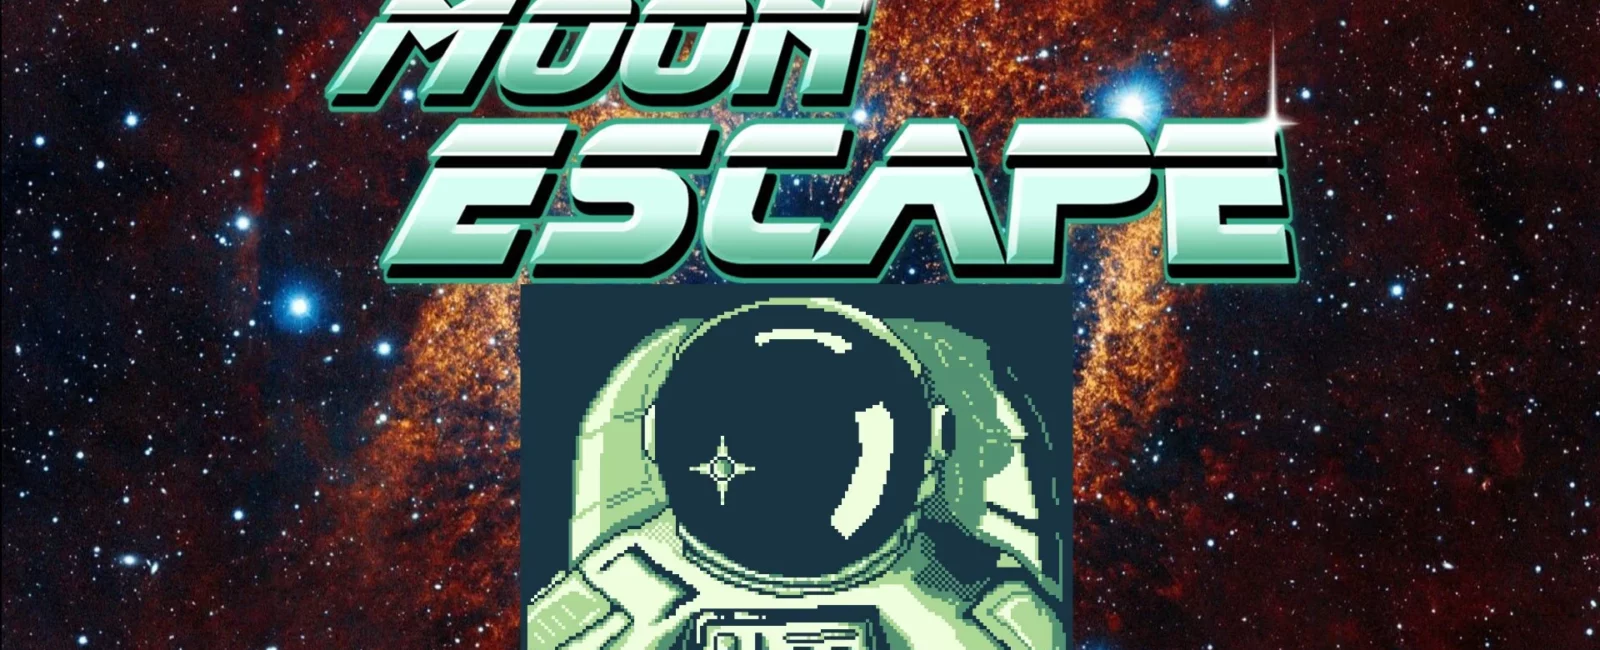 2021: Moon Escape nintendo switch game header